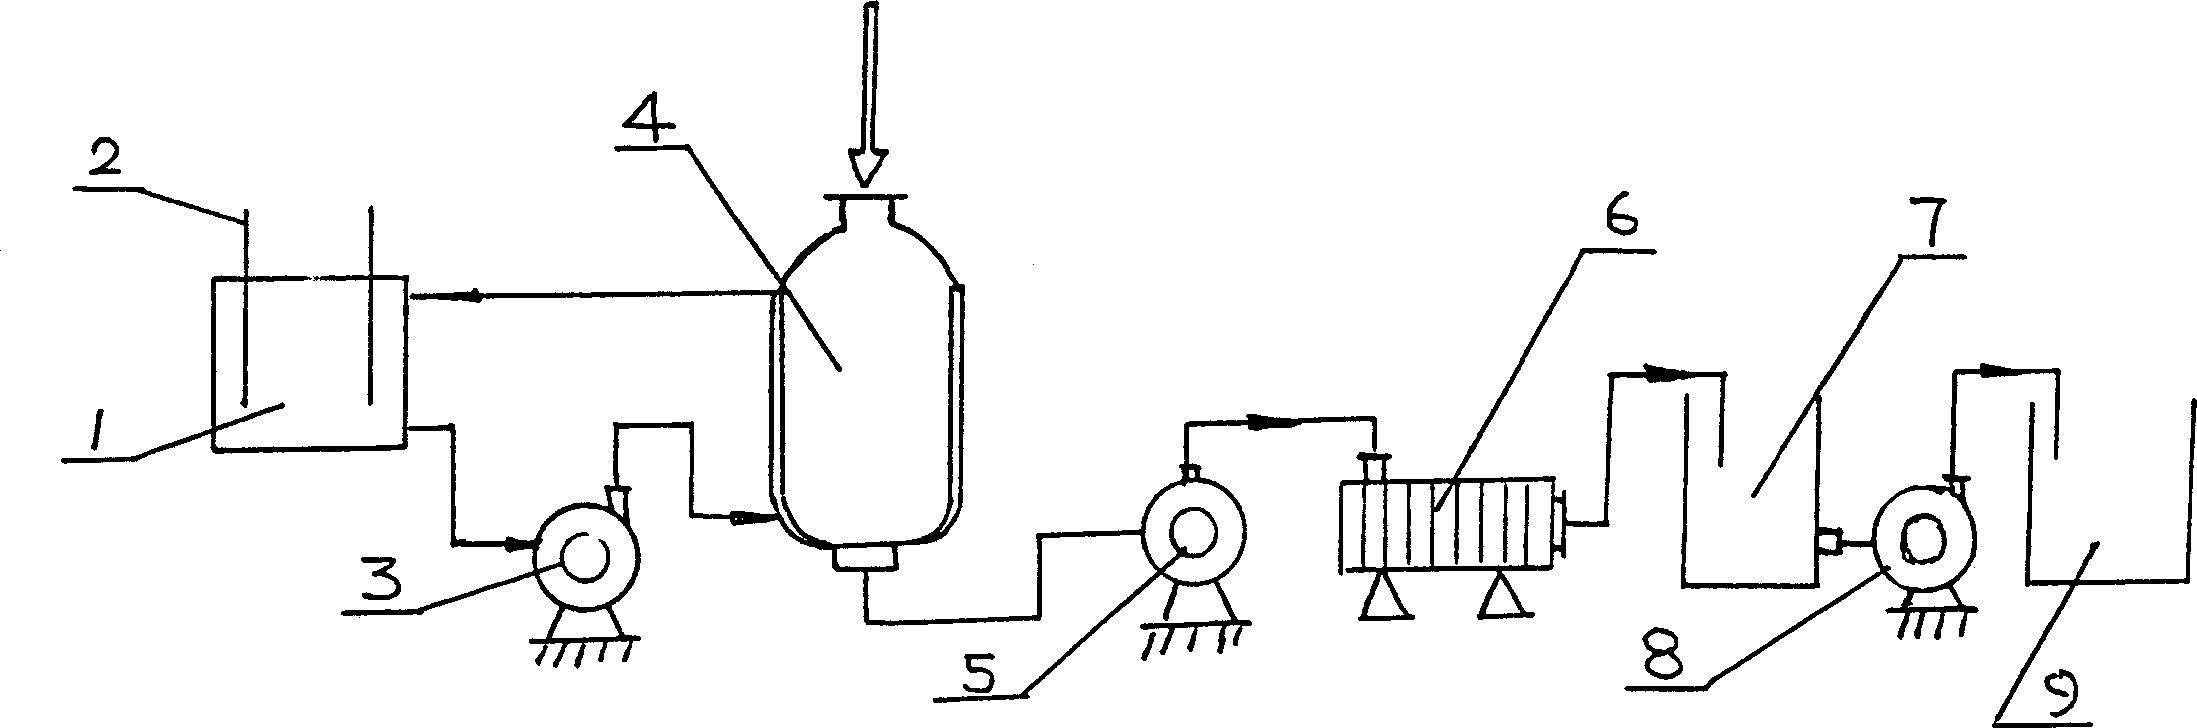 Preparation method of amino acid foliage fertilizer